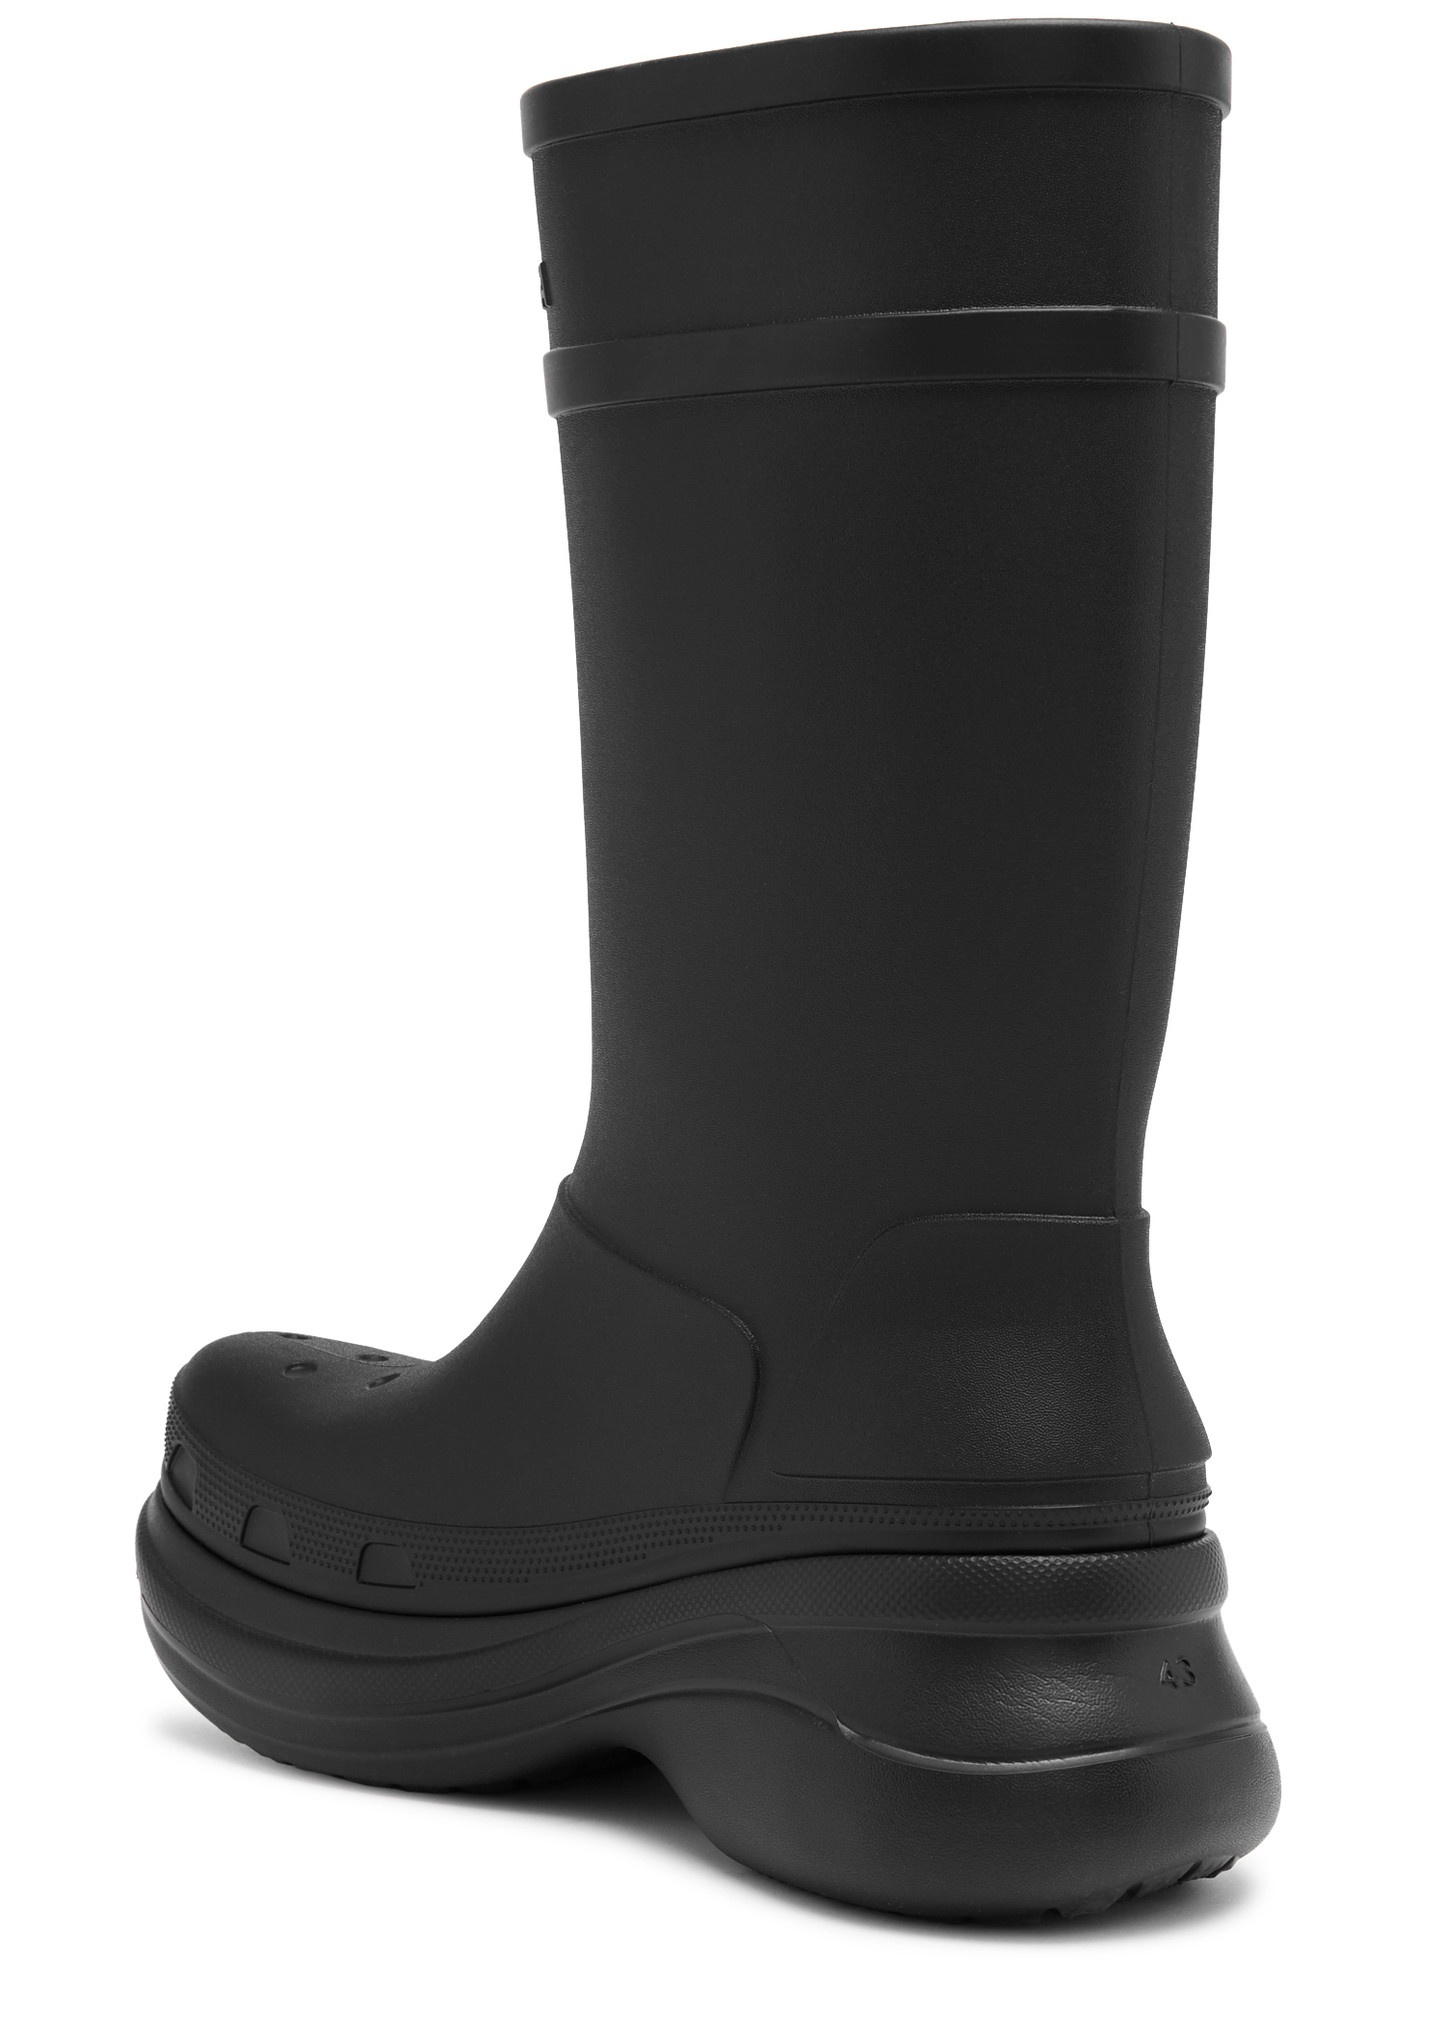 X Crocs rubber boots - 2